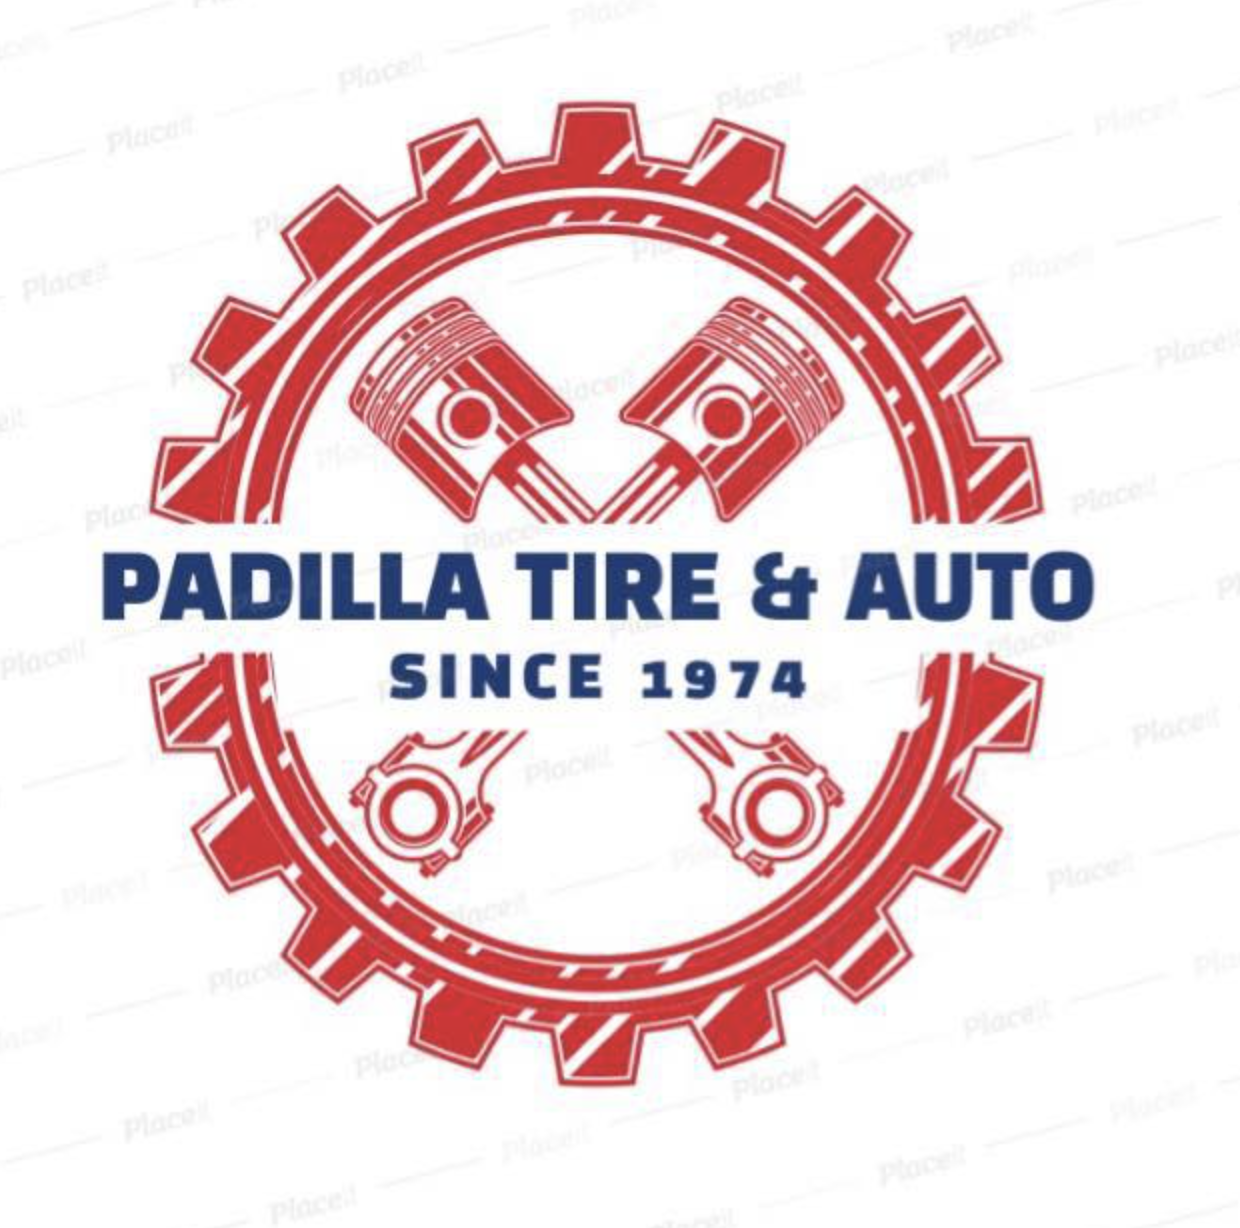 Padilla Tire And Auto Repair - Rancho Cucamonga Business Listings.com